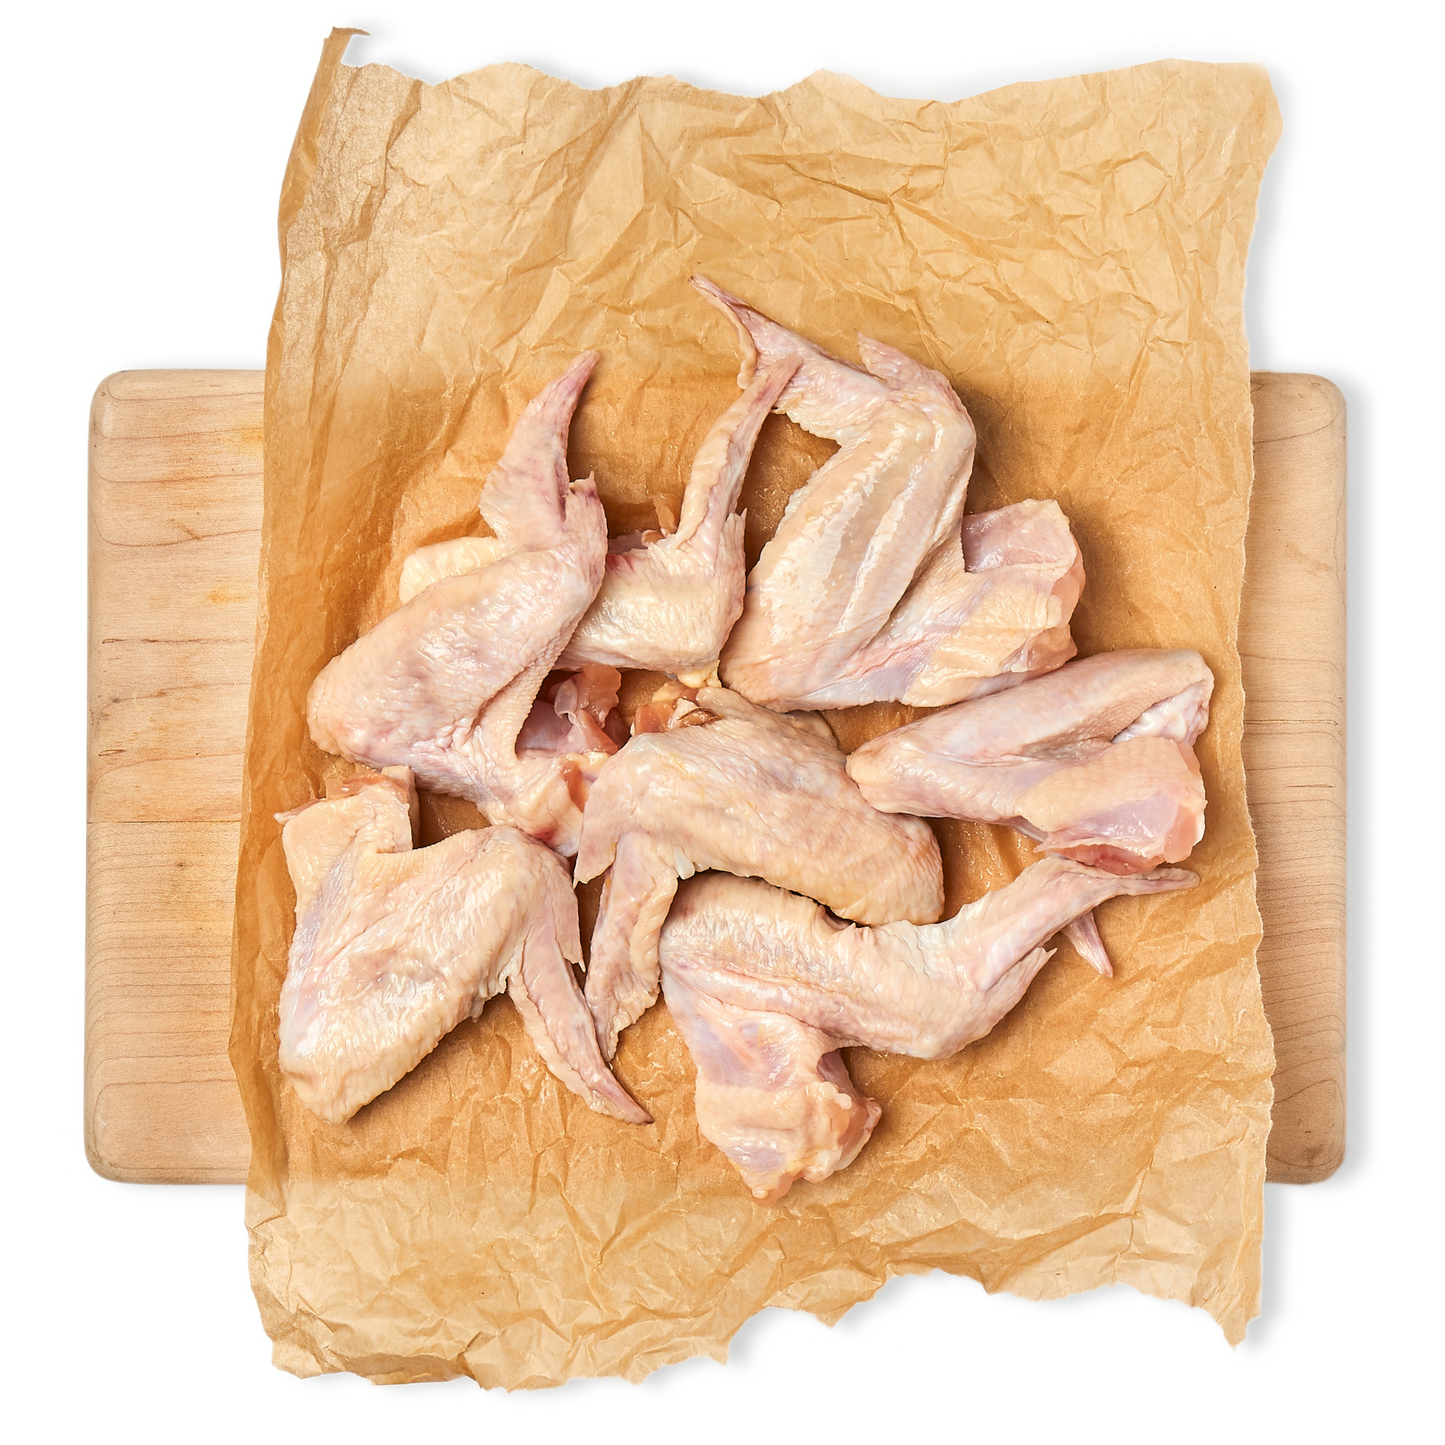 azuluna foods premium pasture-raised chicken wings